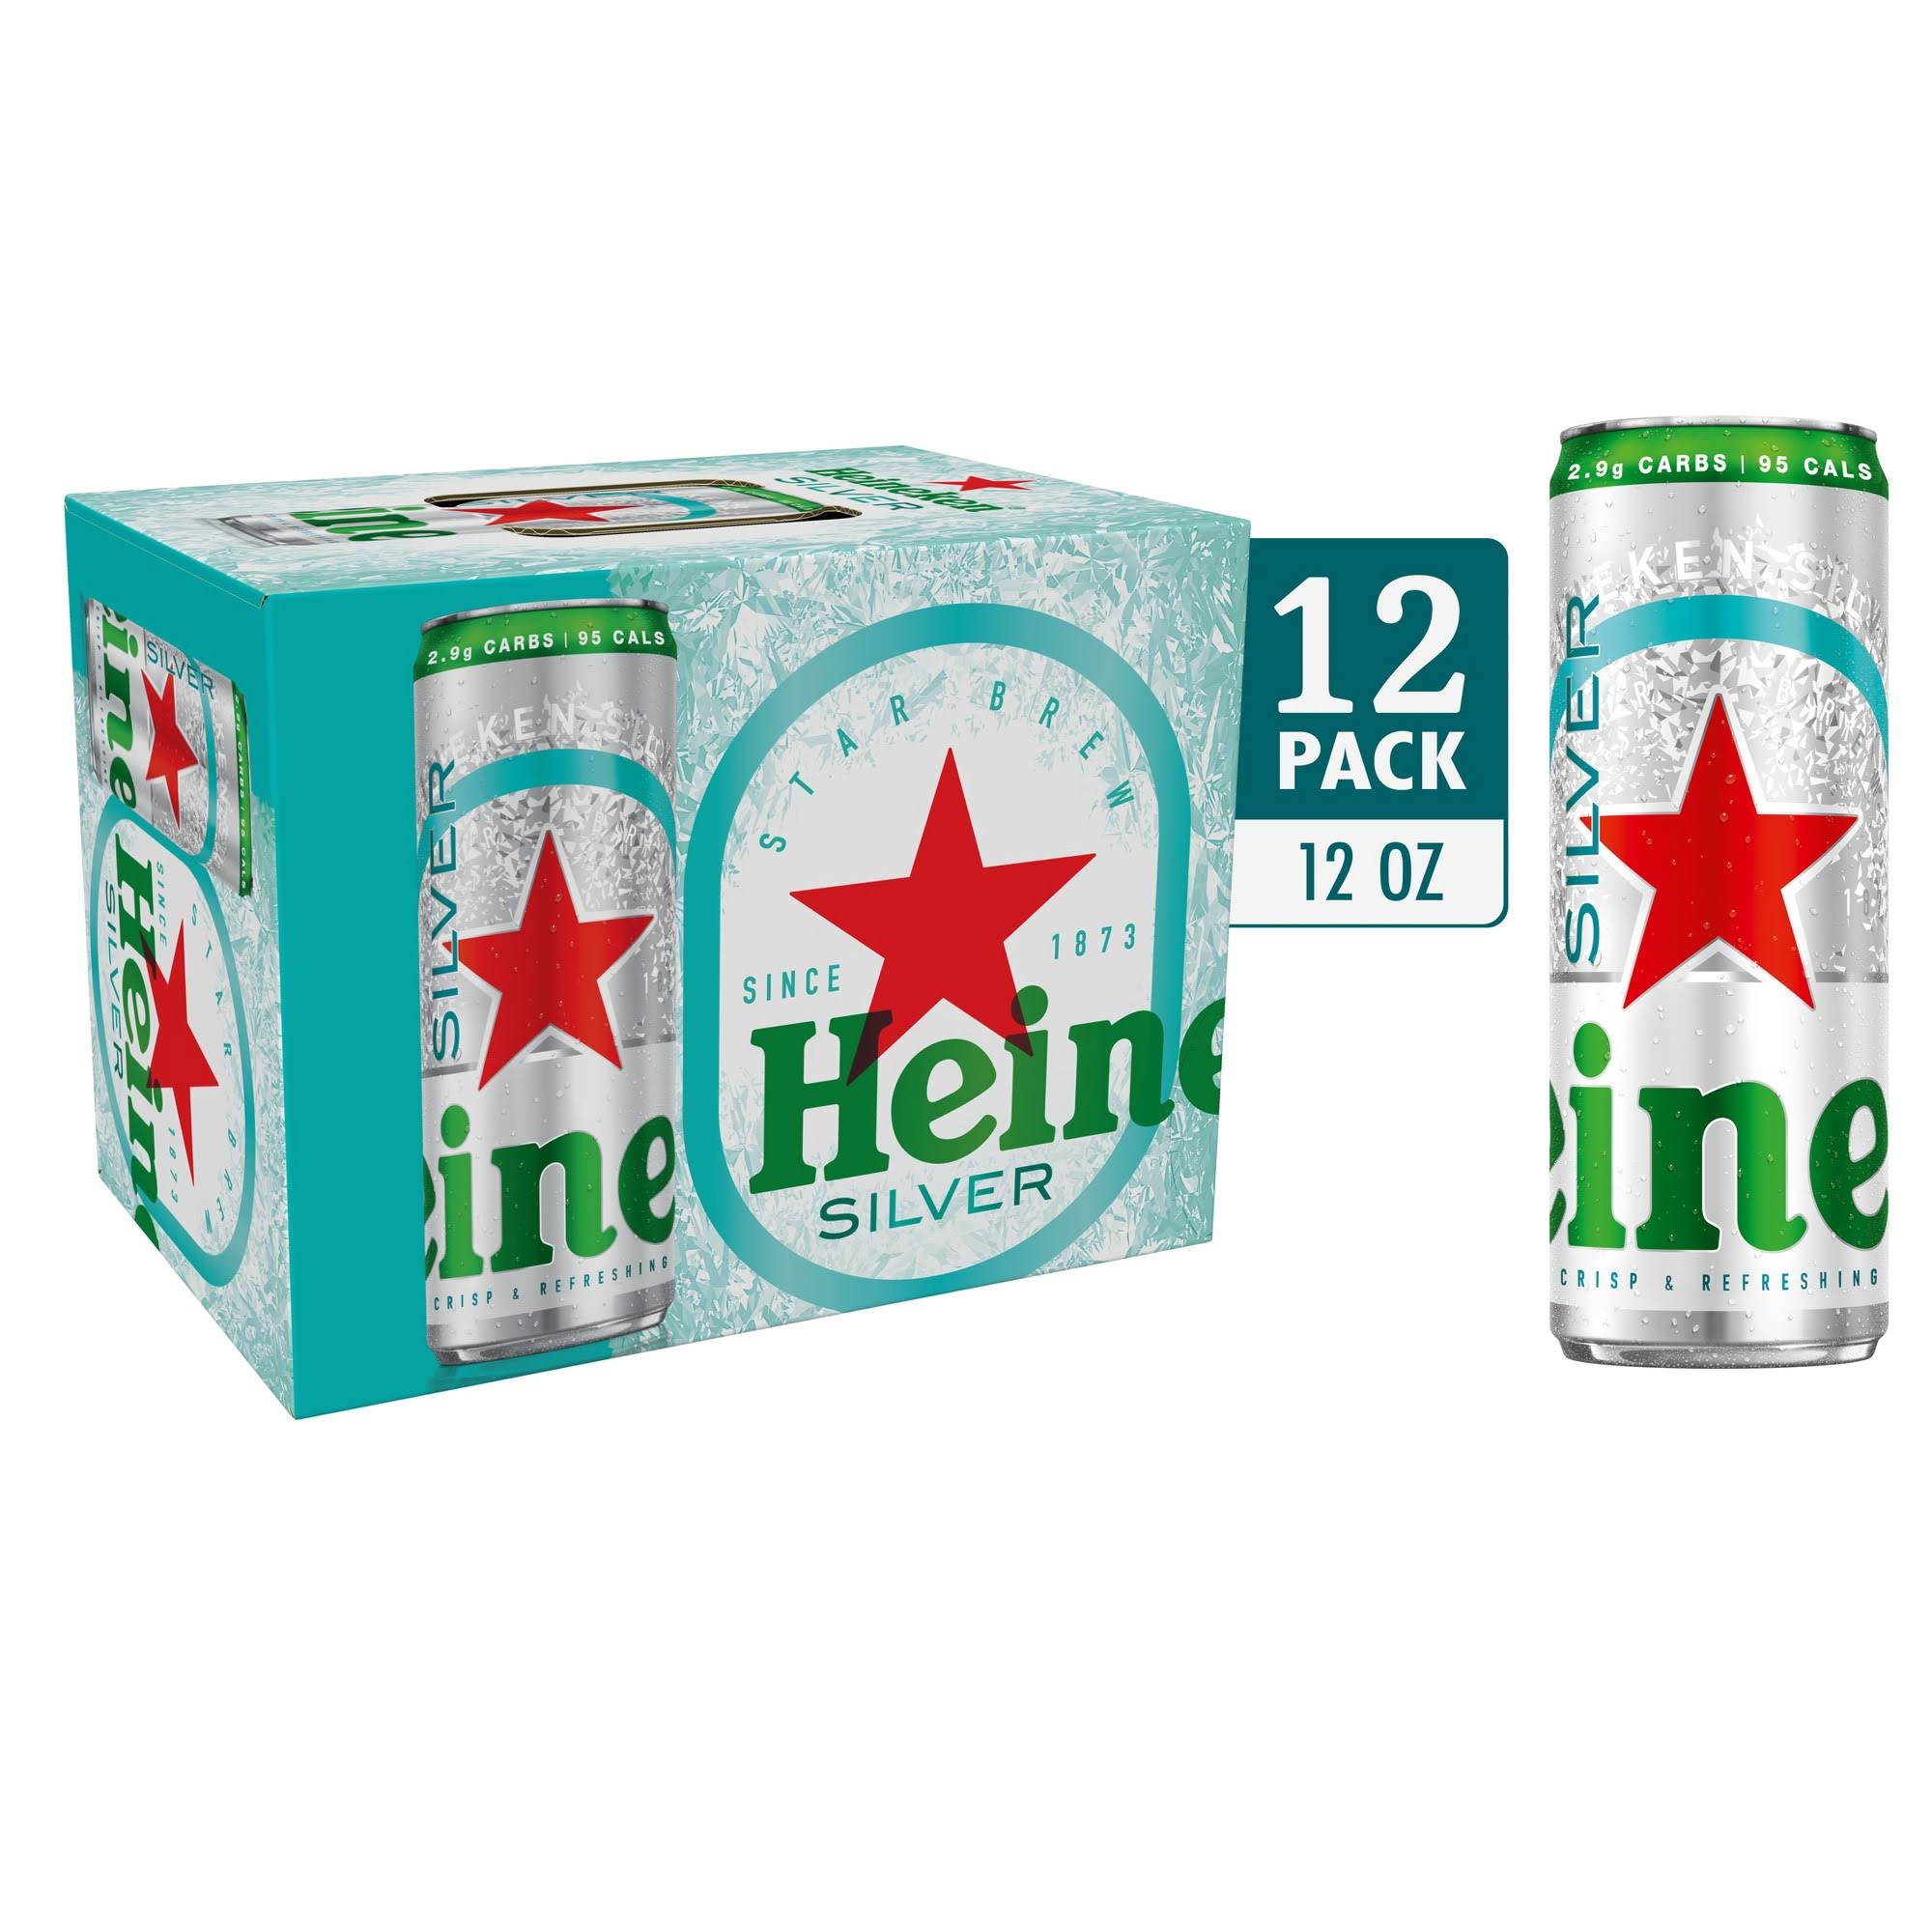 Heineken Silver - 12 Pack, 12 oz Cans